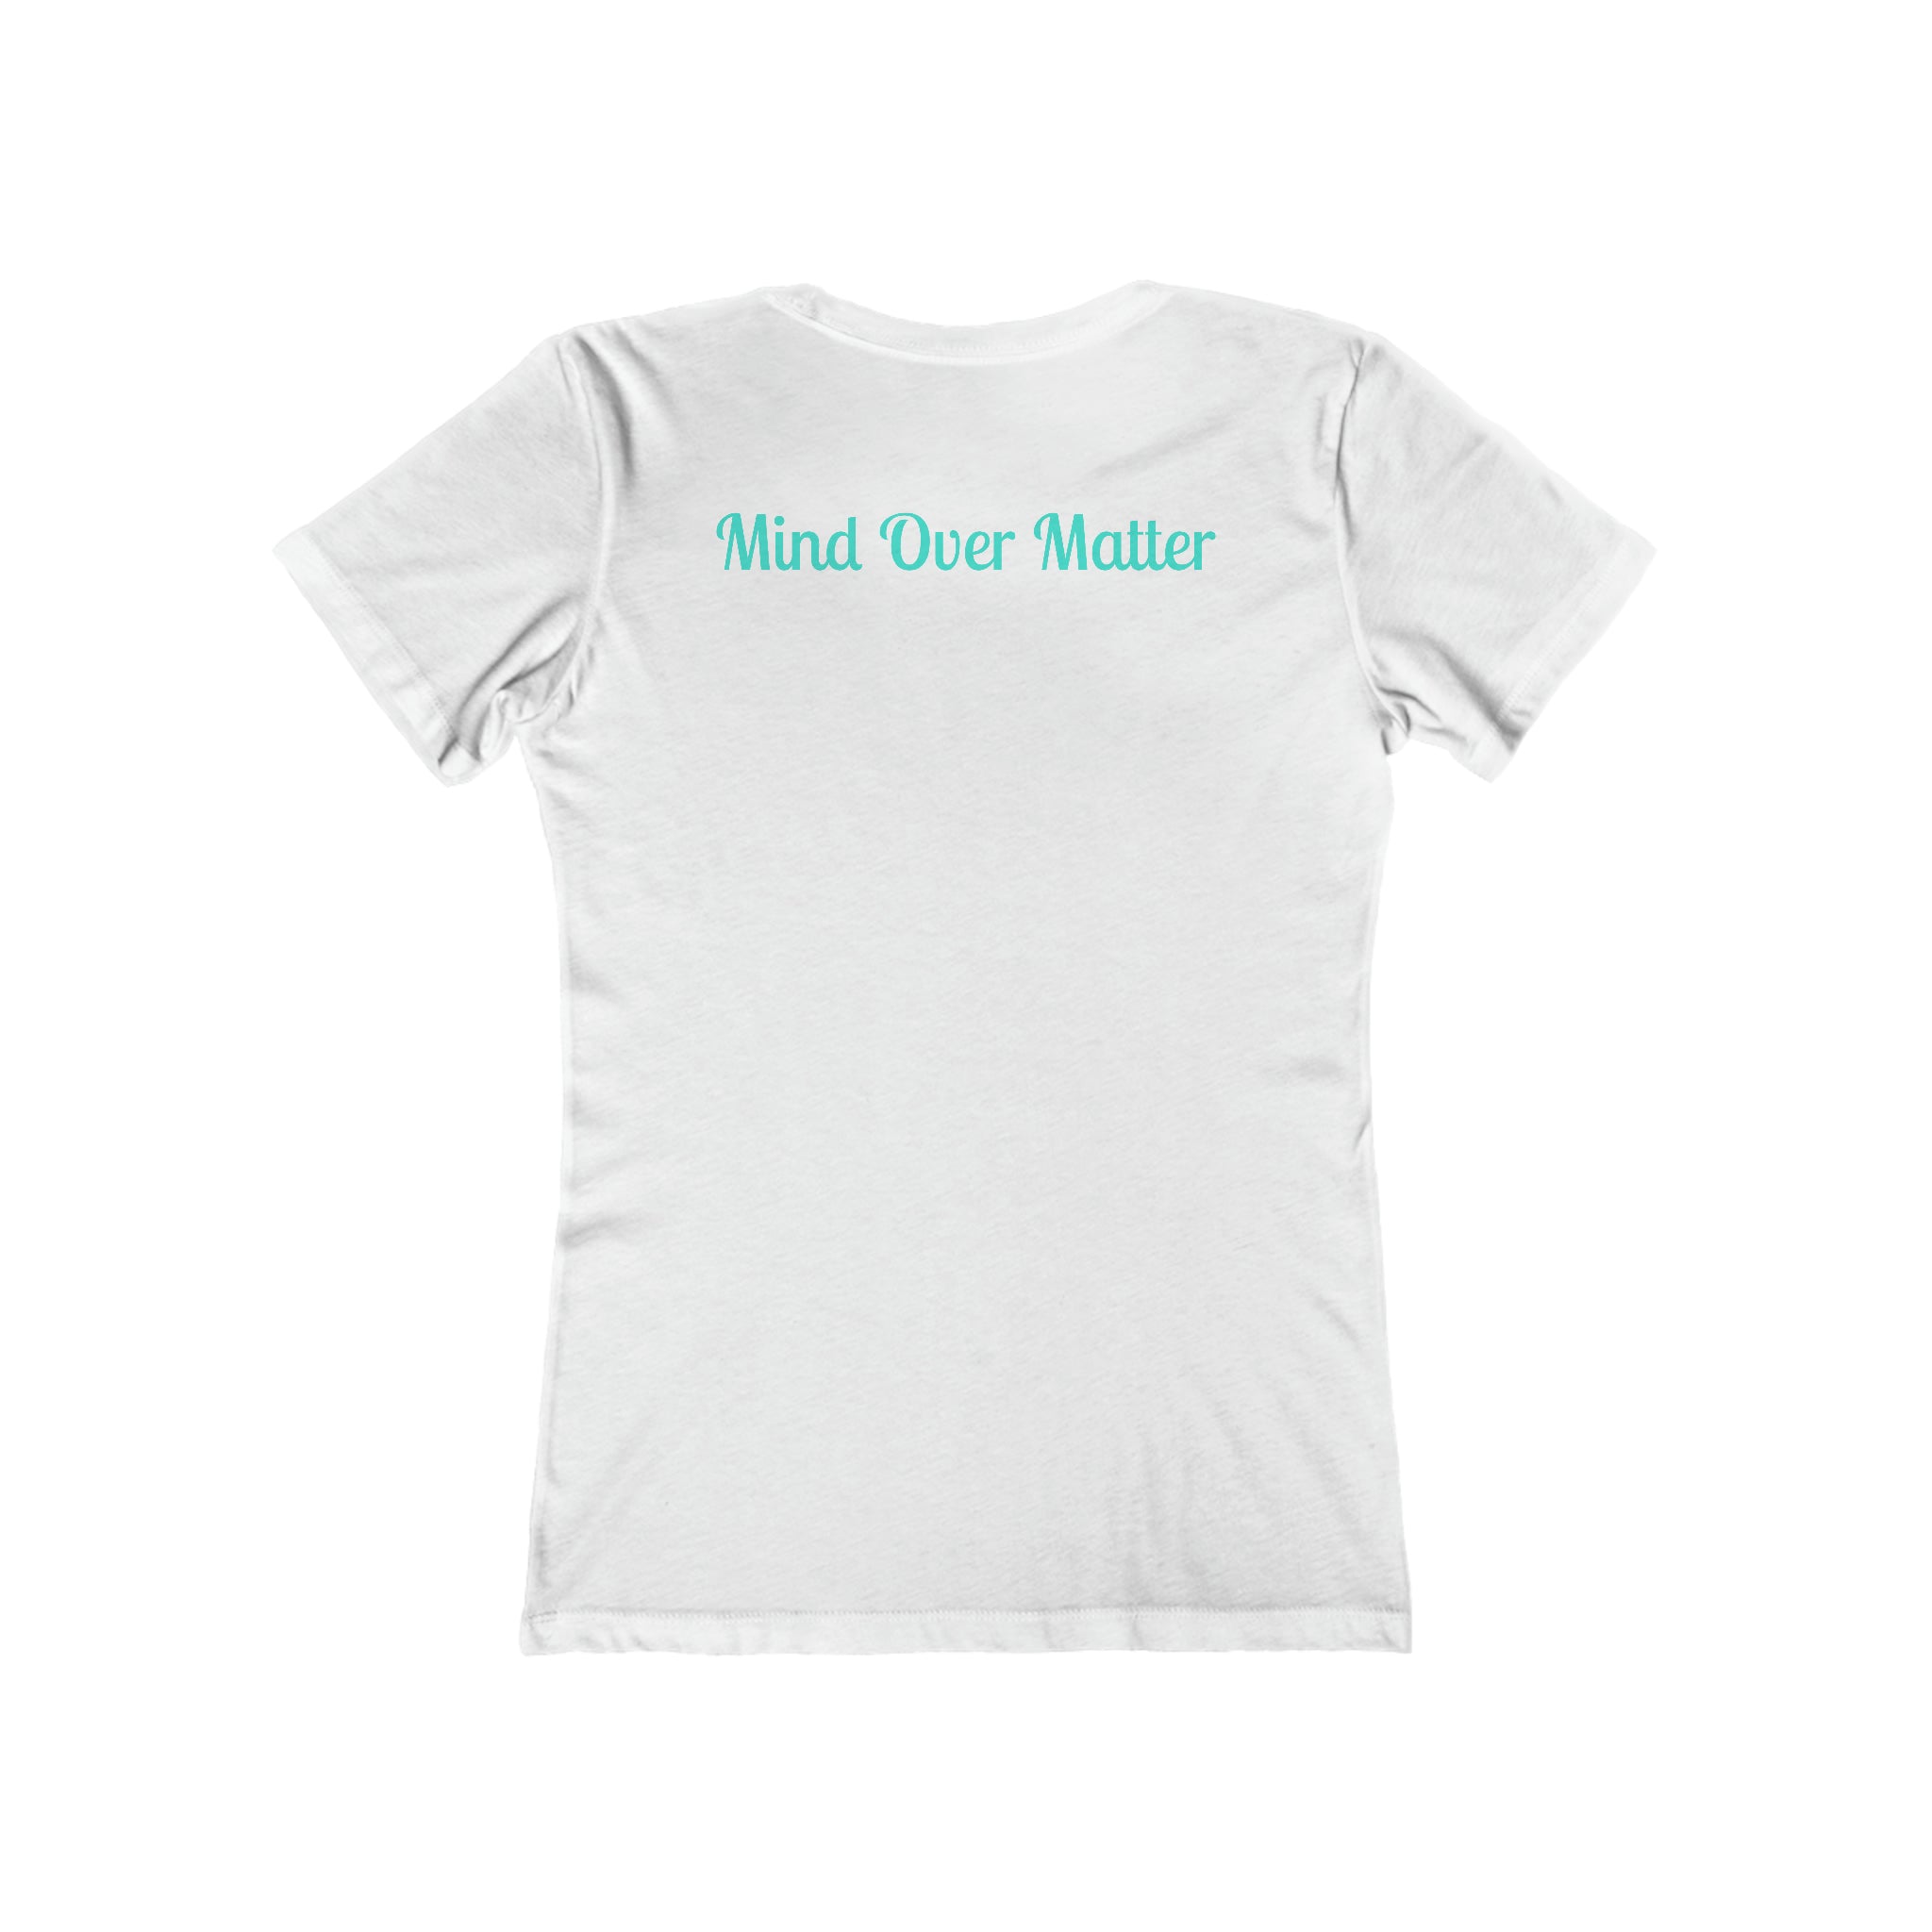 Mind over Matter Boyfriend Tee: empower your mindset Solid White Awareness Break the Stigma Mental Health Support Pledge Donation slim fit shirt Tee women shirt T-Shirt 3270399673540754352_2048_8517195a-1534-483a-907e-cd704a040448 Printify